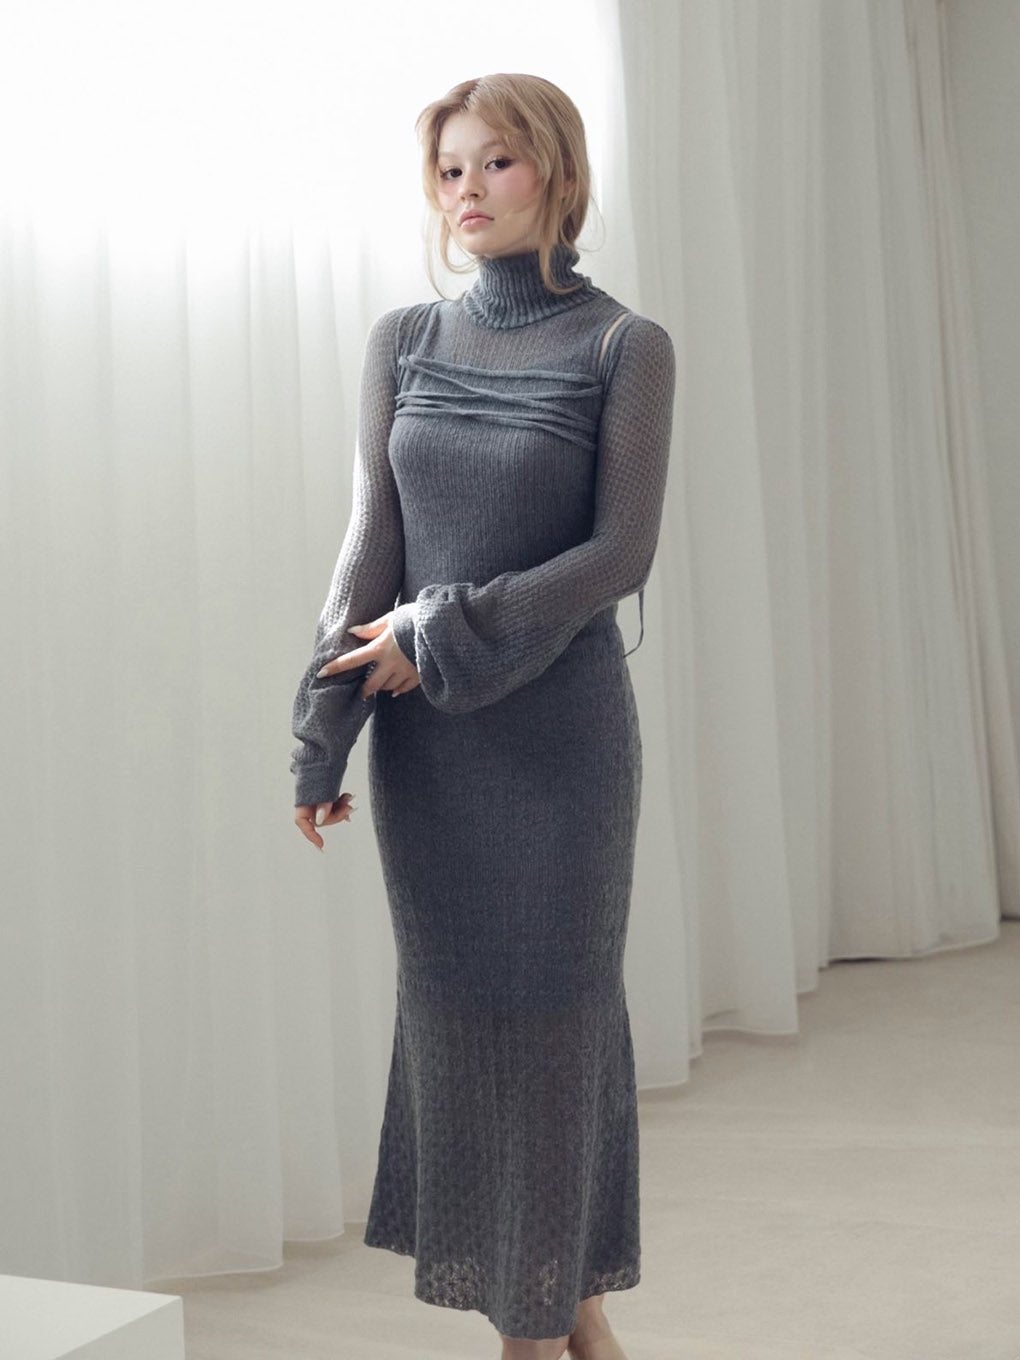 Sophie seethrough knit dress